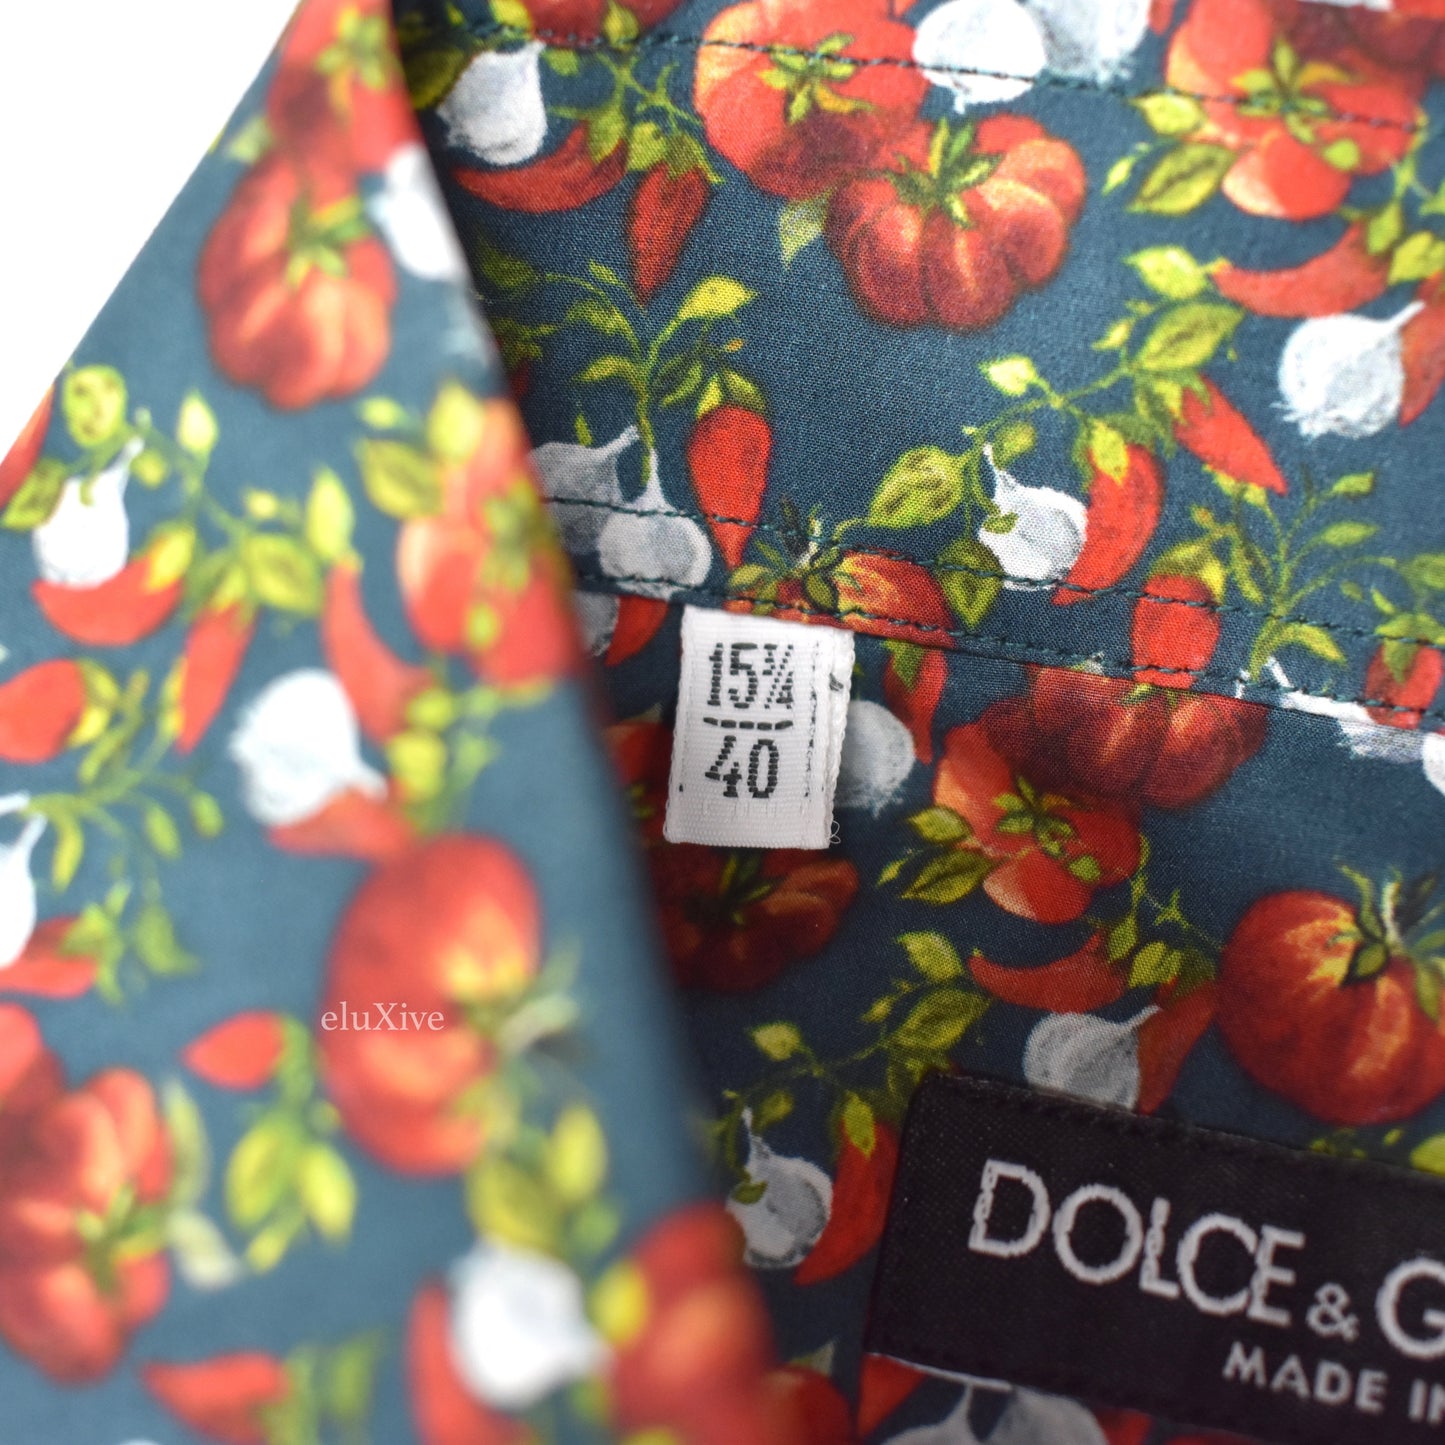 Dolce & Gabbana - Tomato / Garlic / Pepper Print Shirt